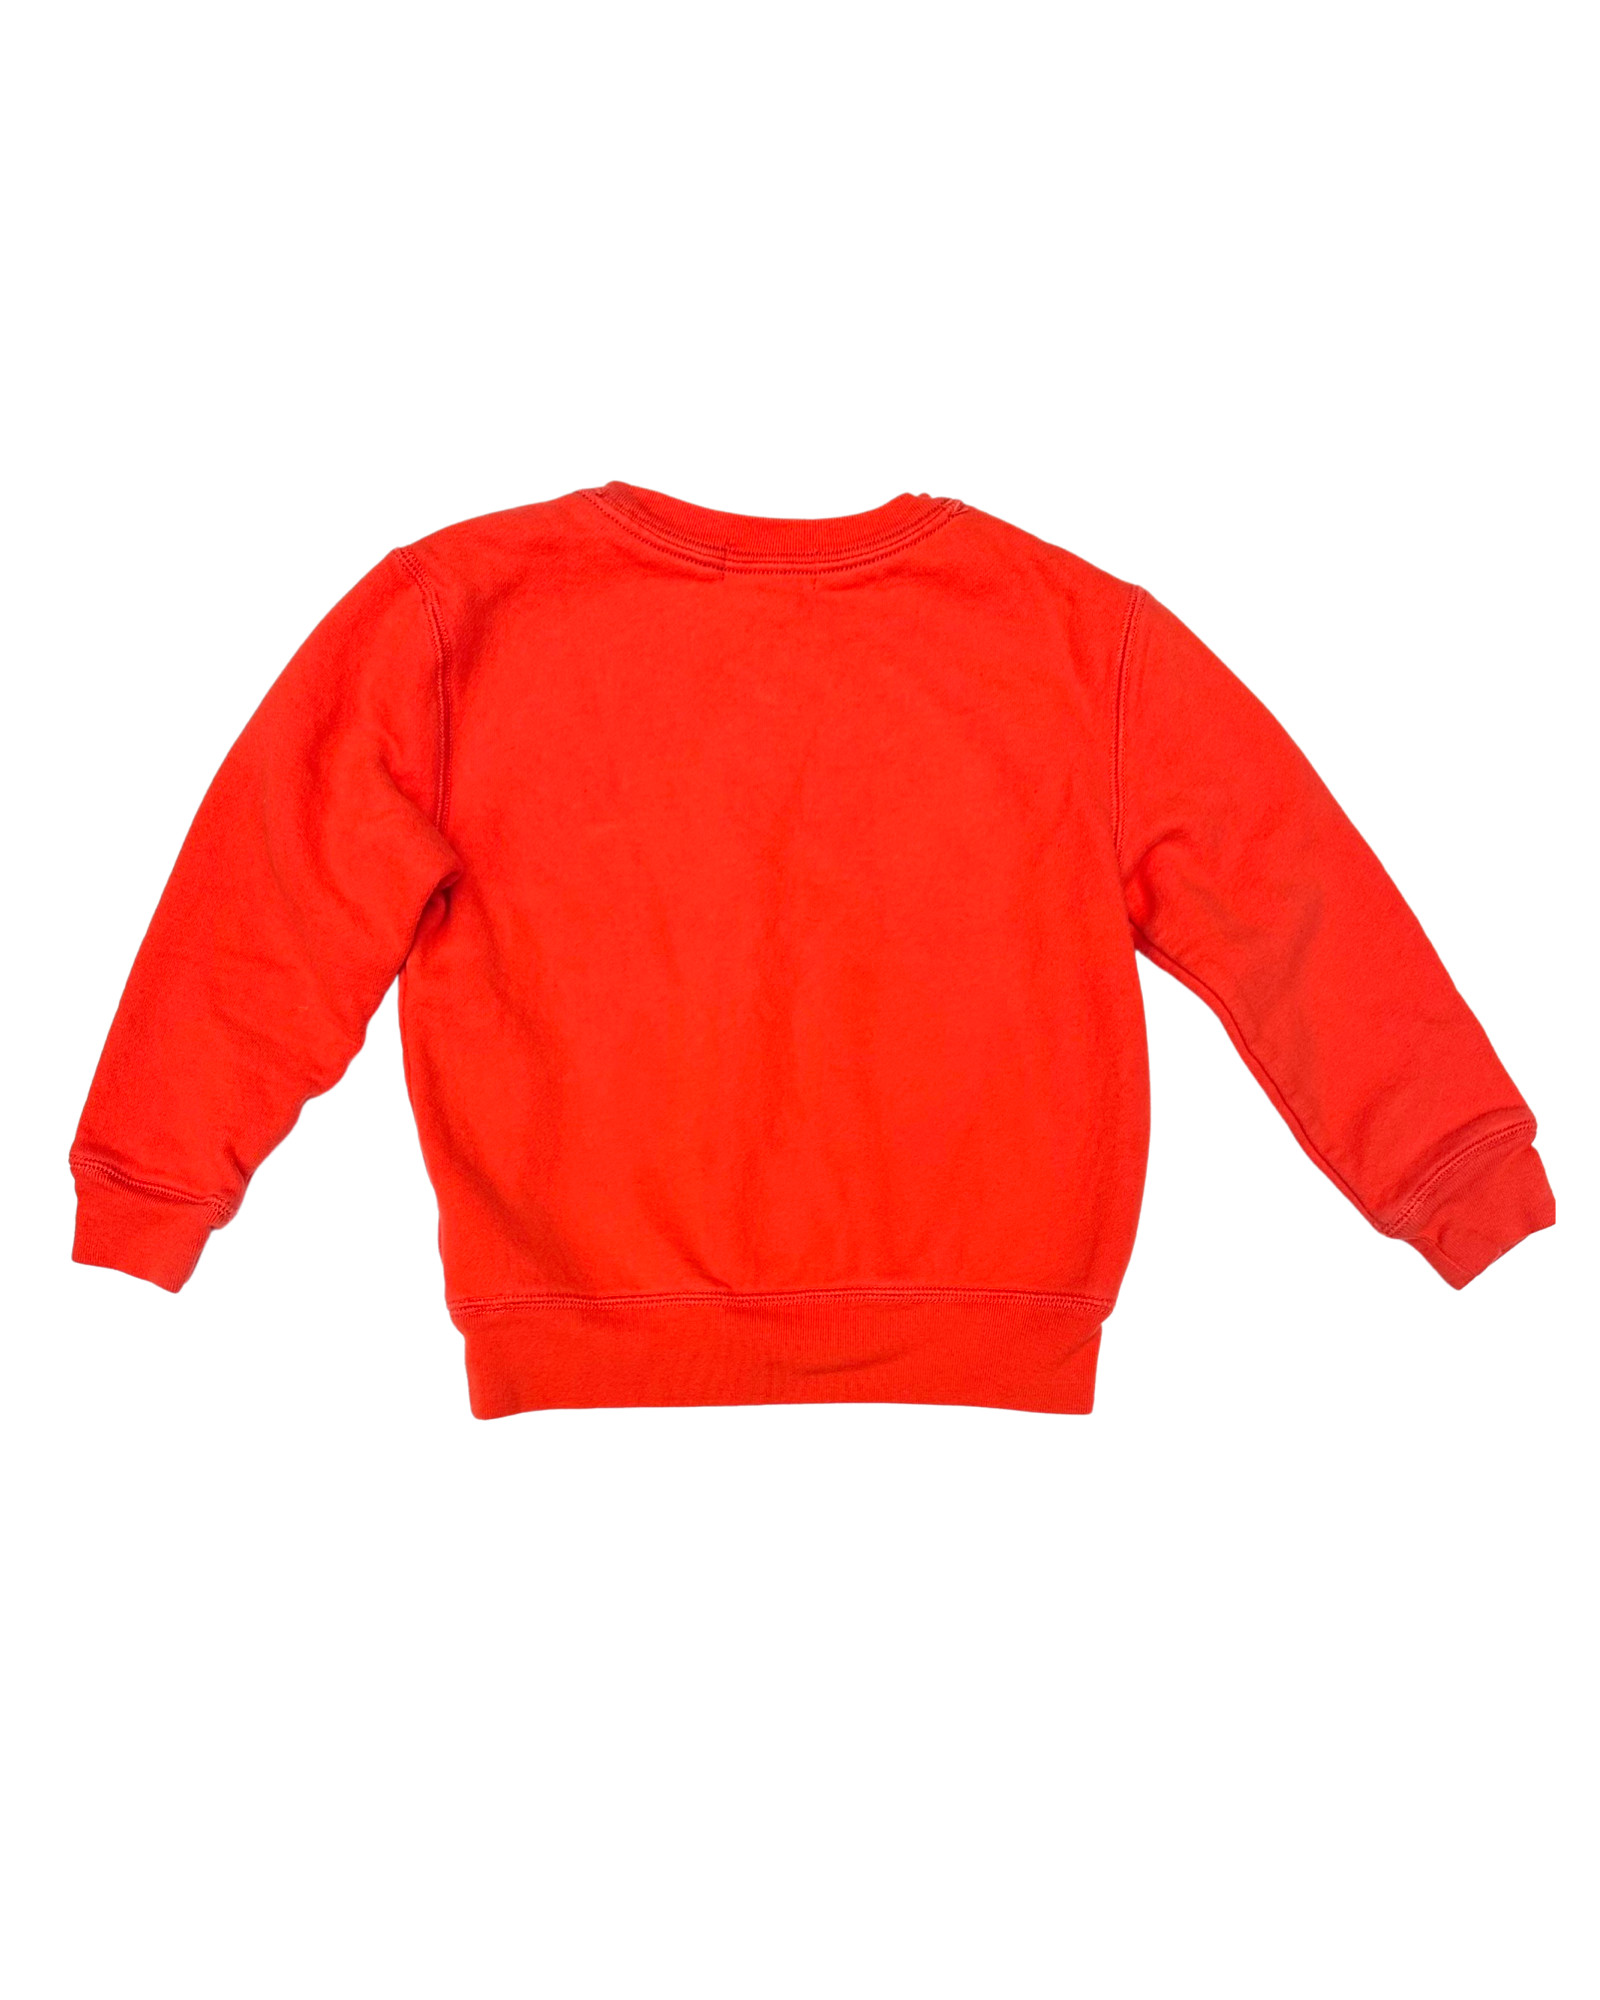 Ralph Lauren vintage sweatshirt in Orange (3-4yrs)